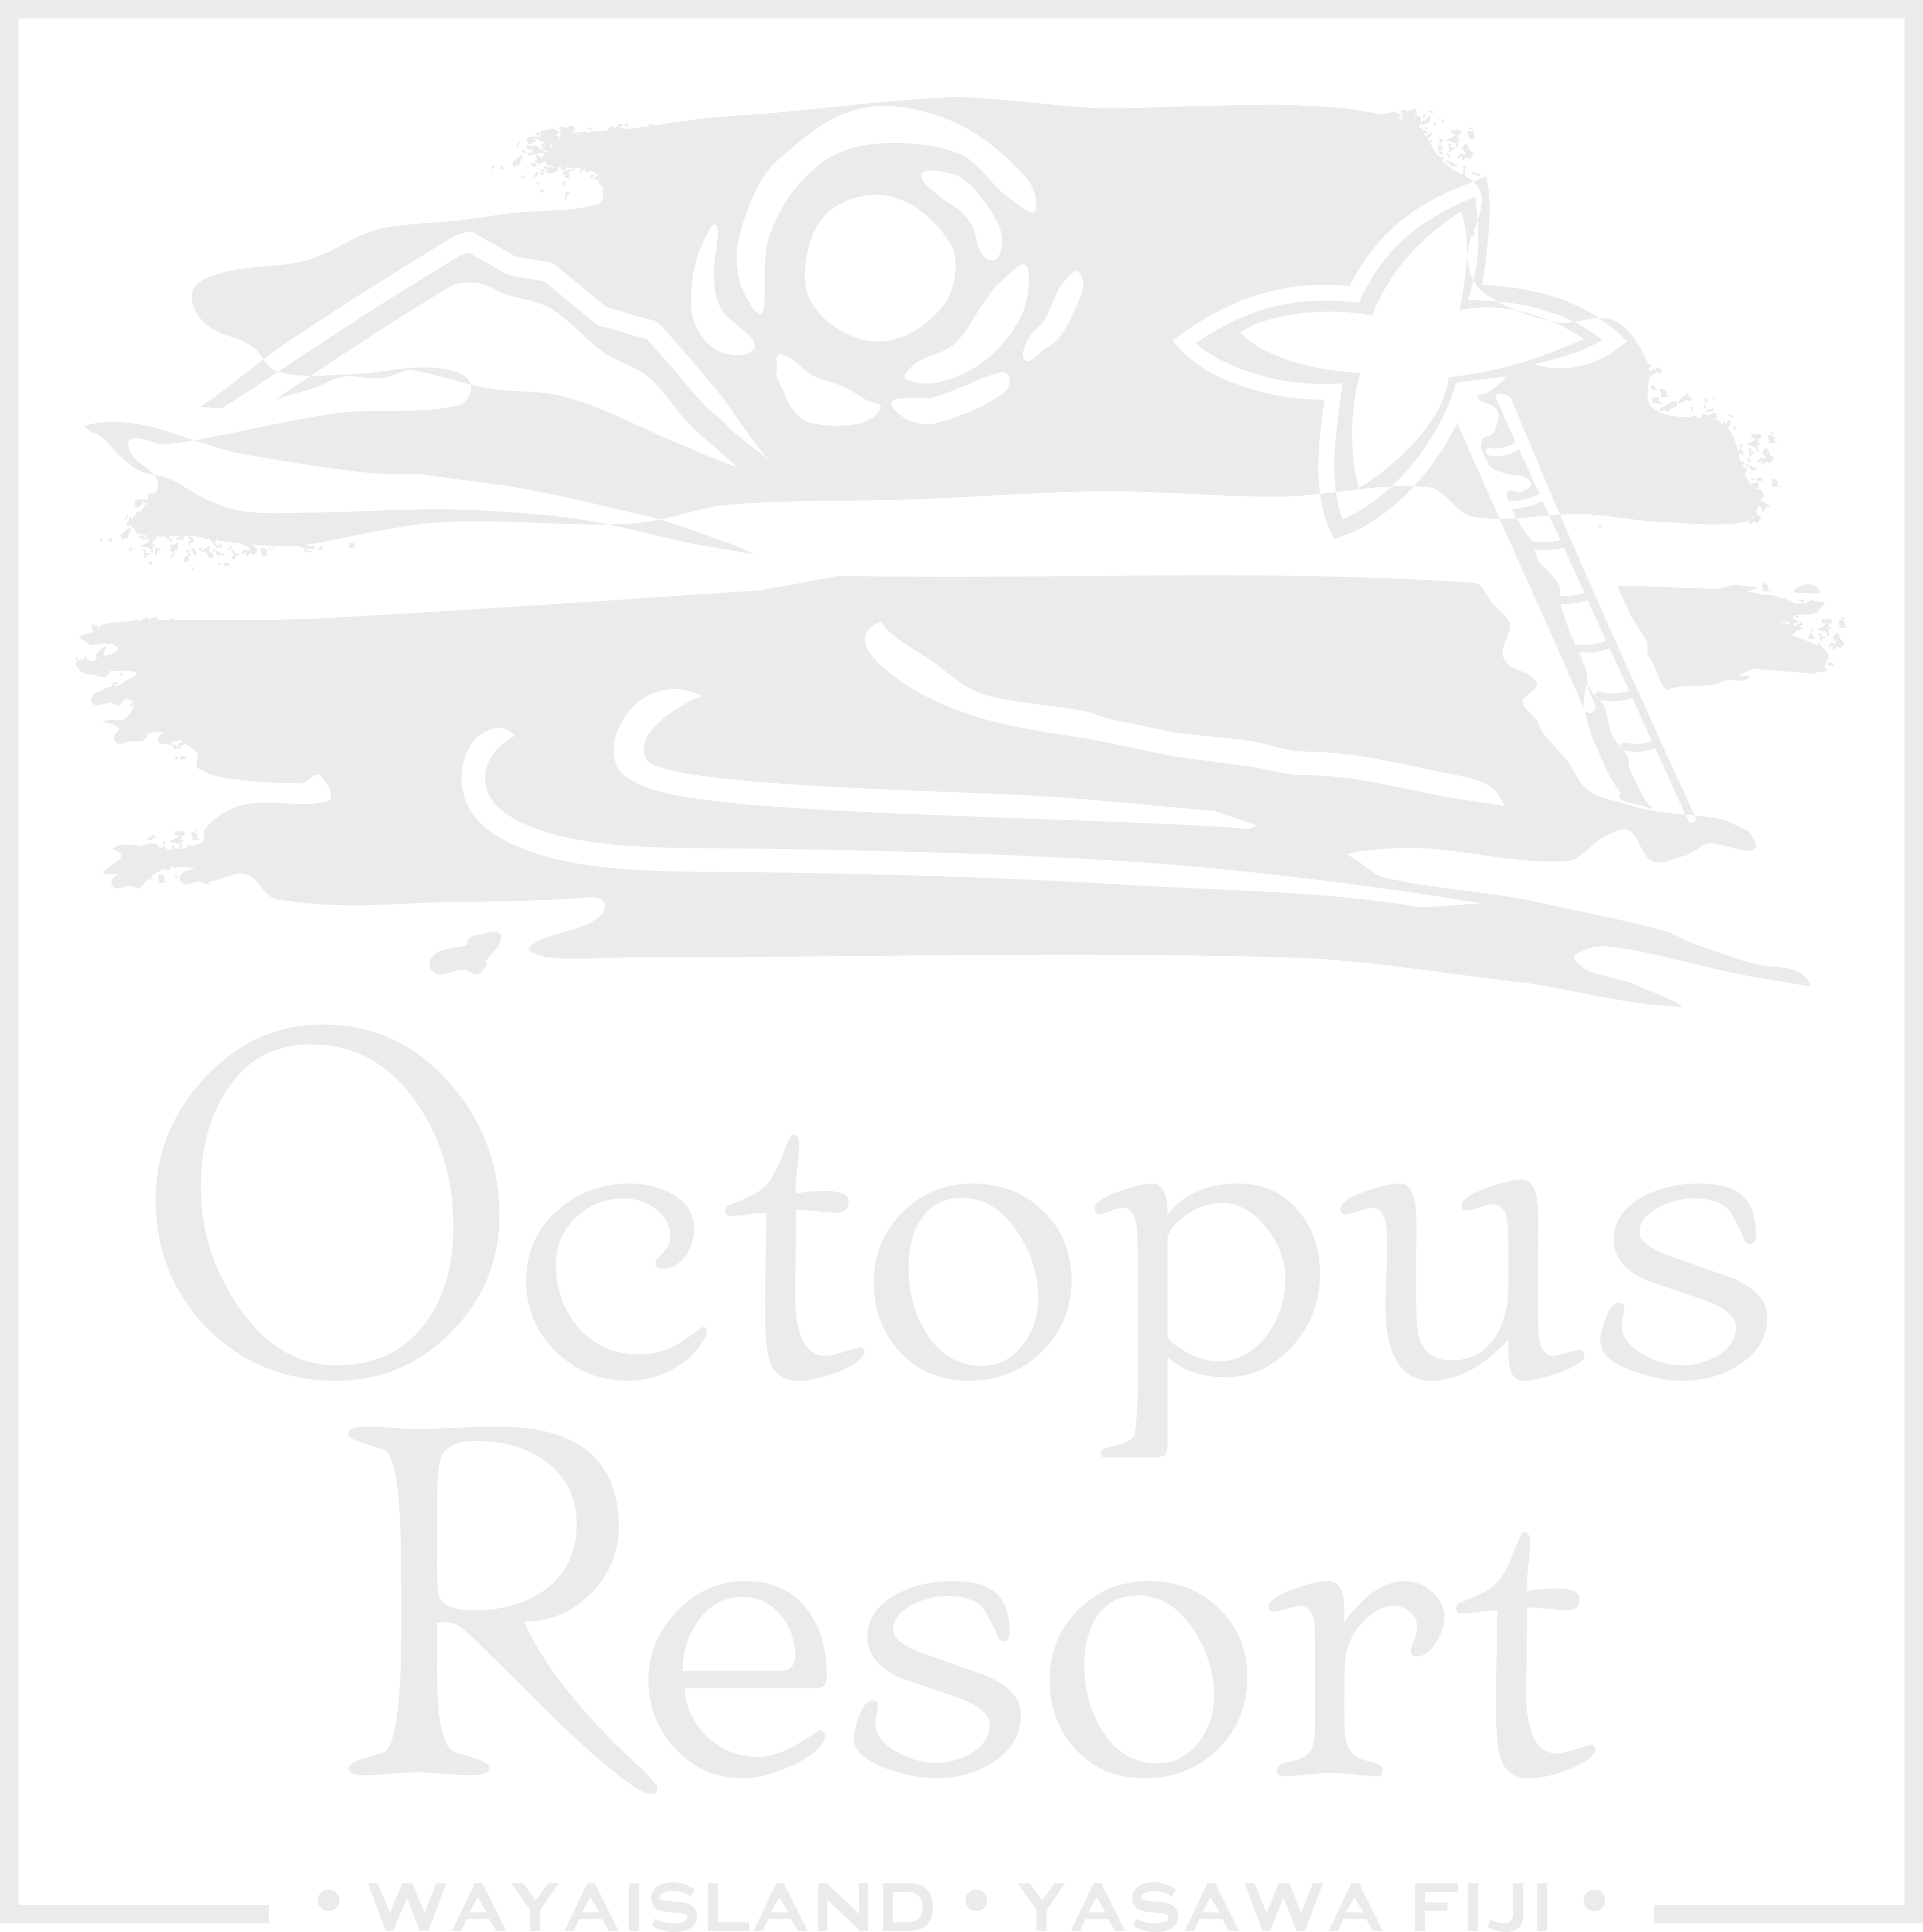 Octopus Resort